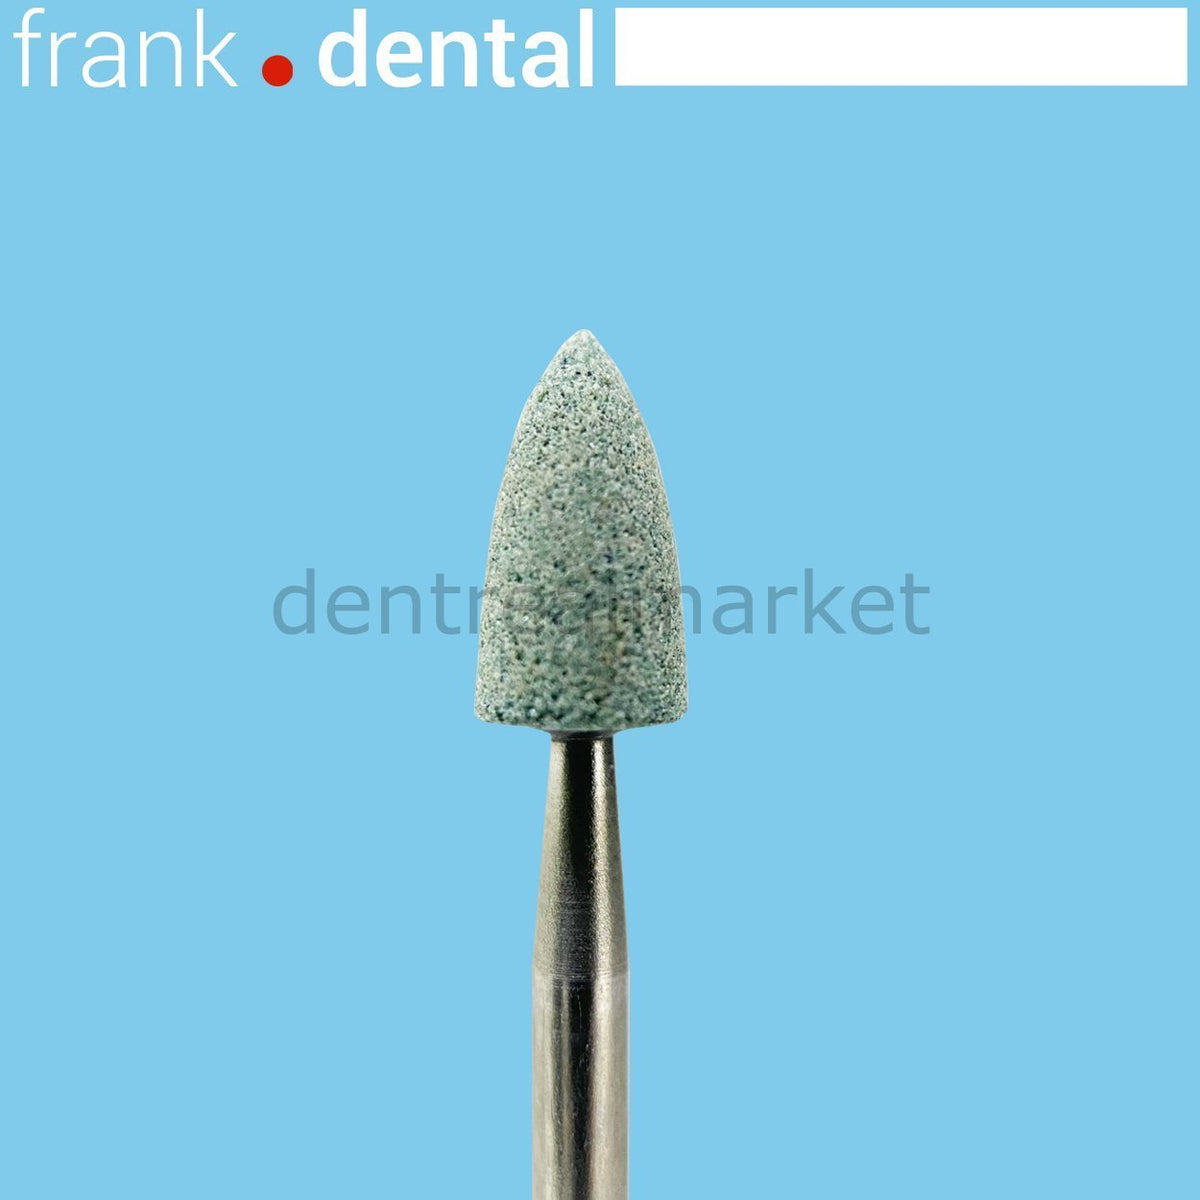 DentrealStore - Frank Dental Green Stone Polishing Burs - 1 pcs Finish Ceramics